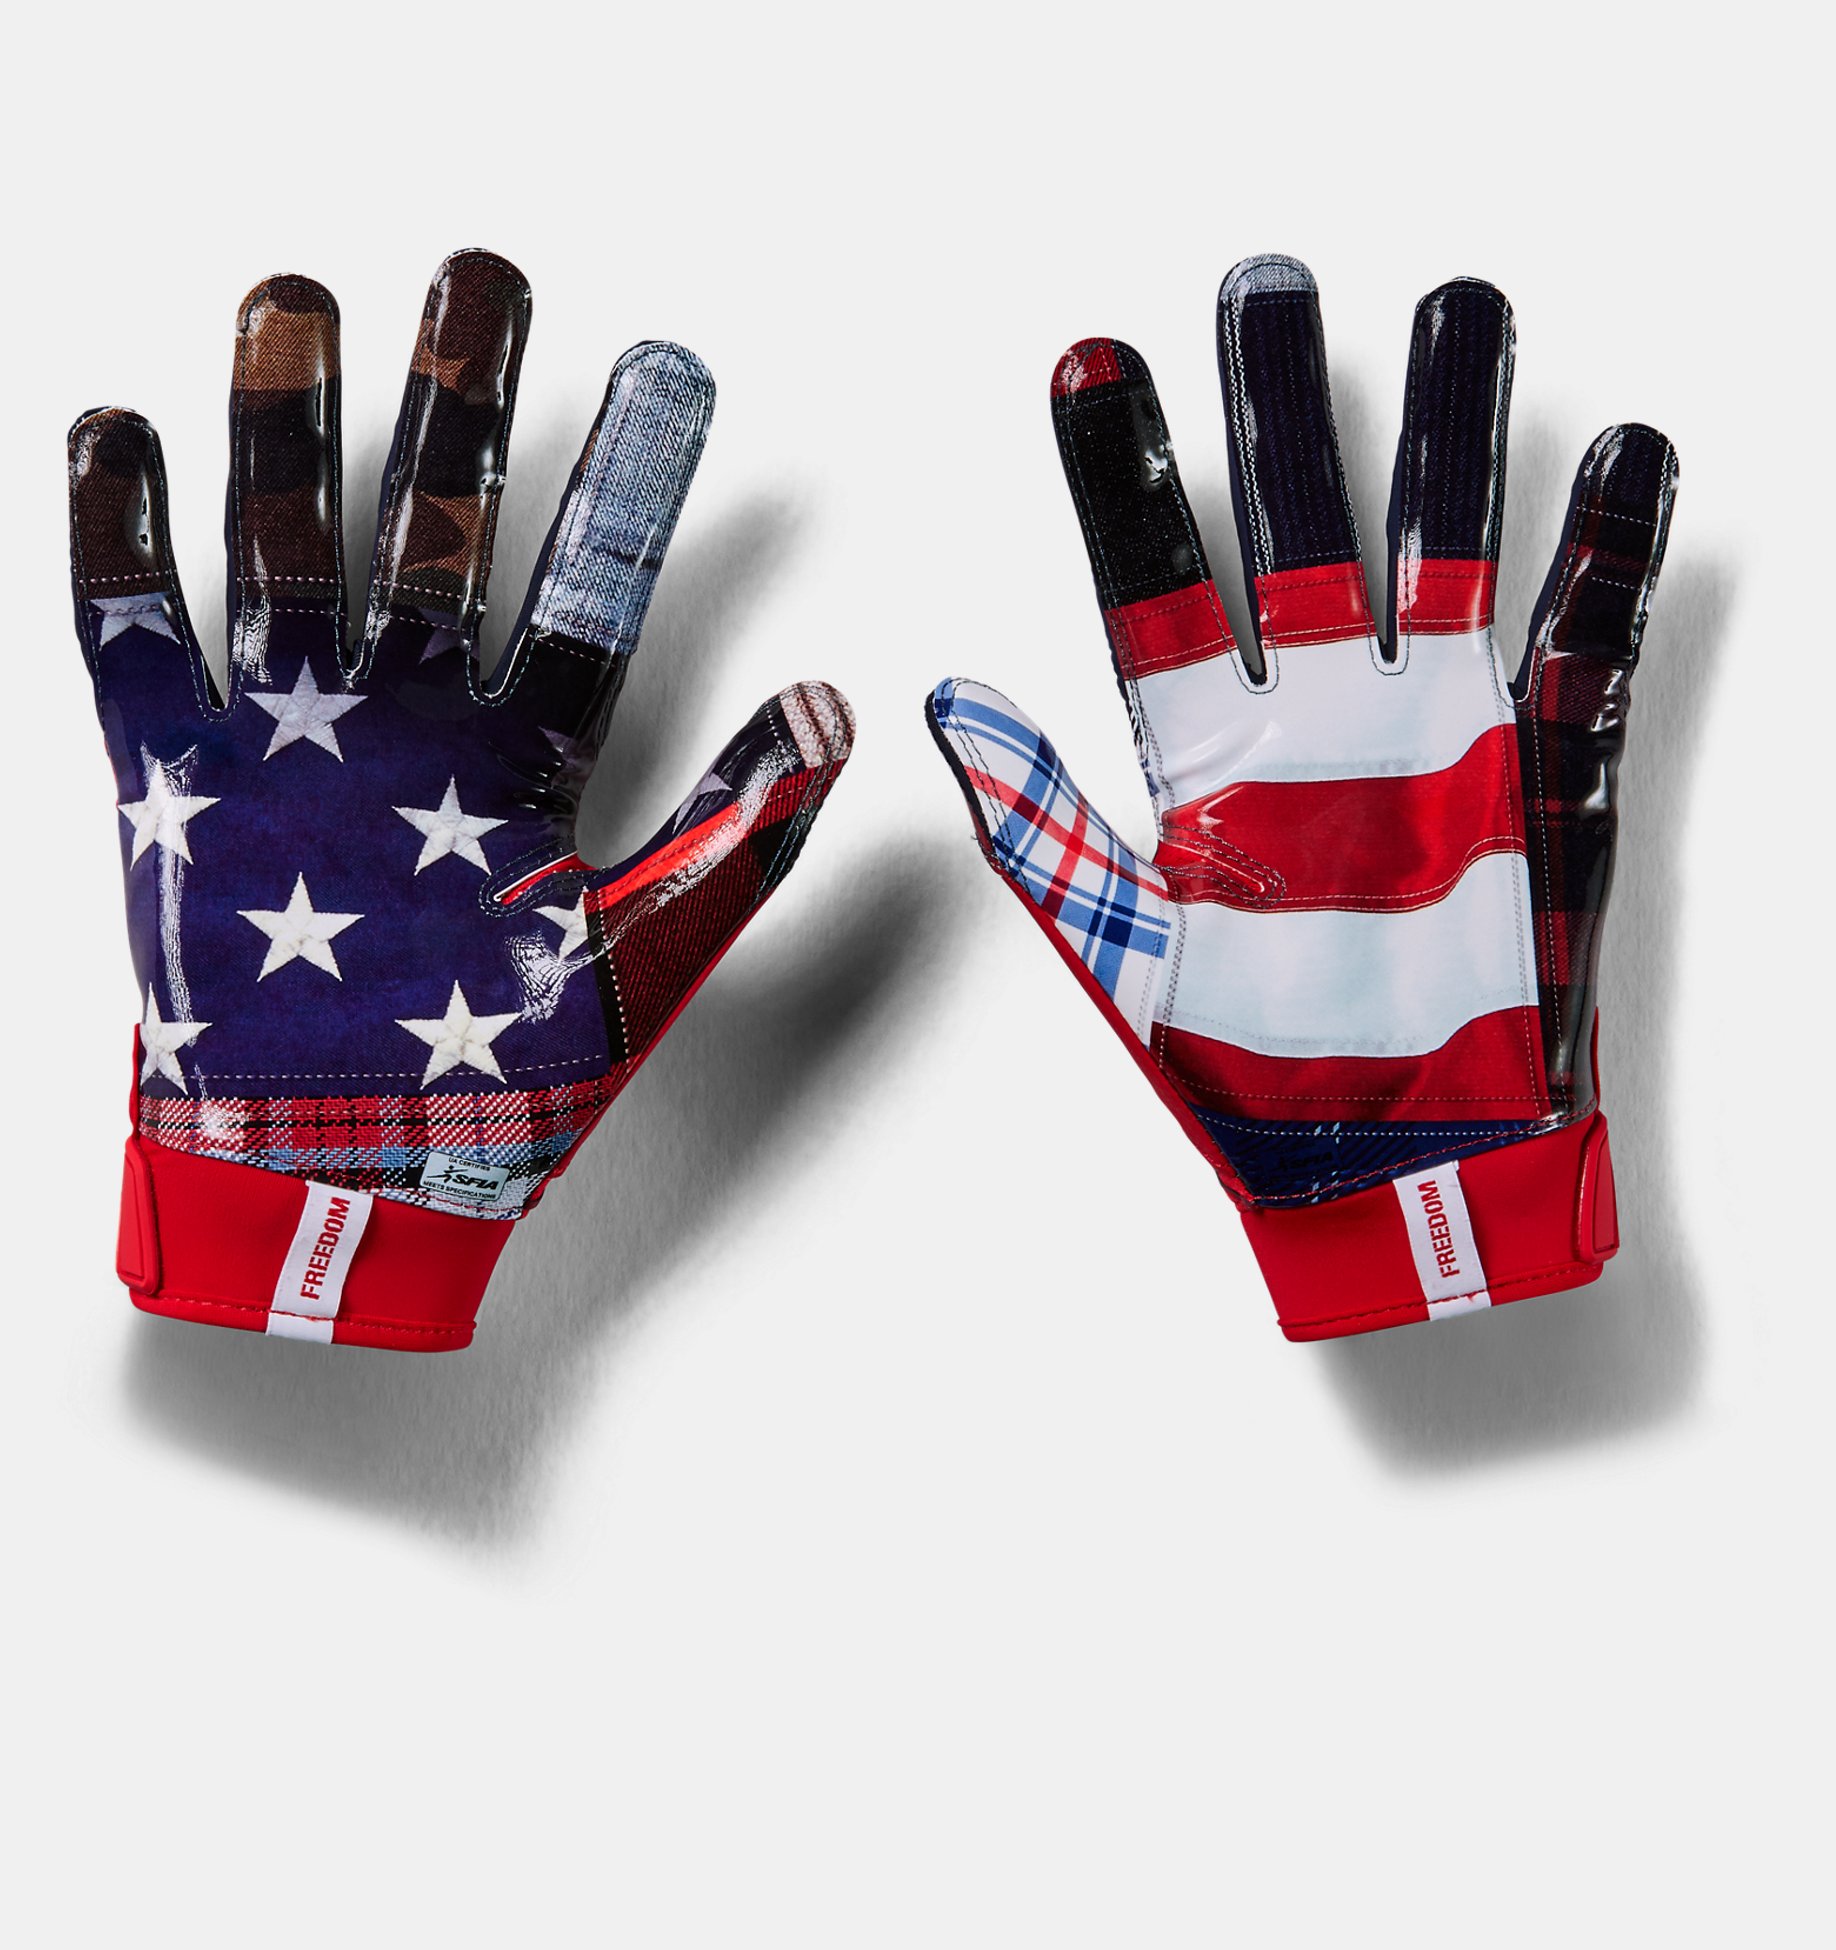 Under Armour Men's UA Spotlight Receiver Gloves 1290814-001 Black/White 